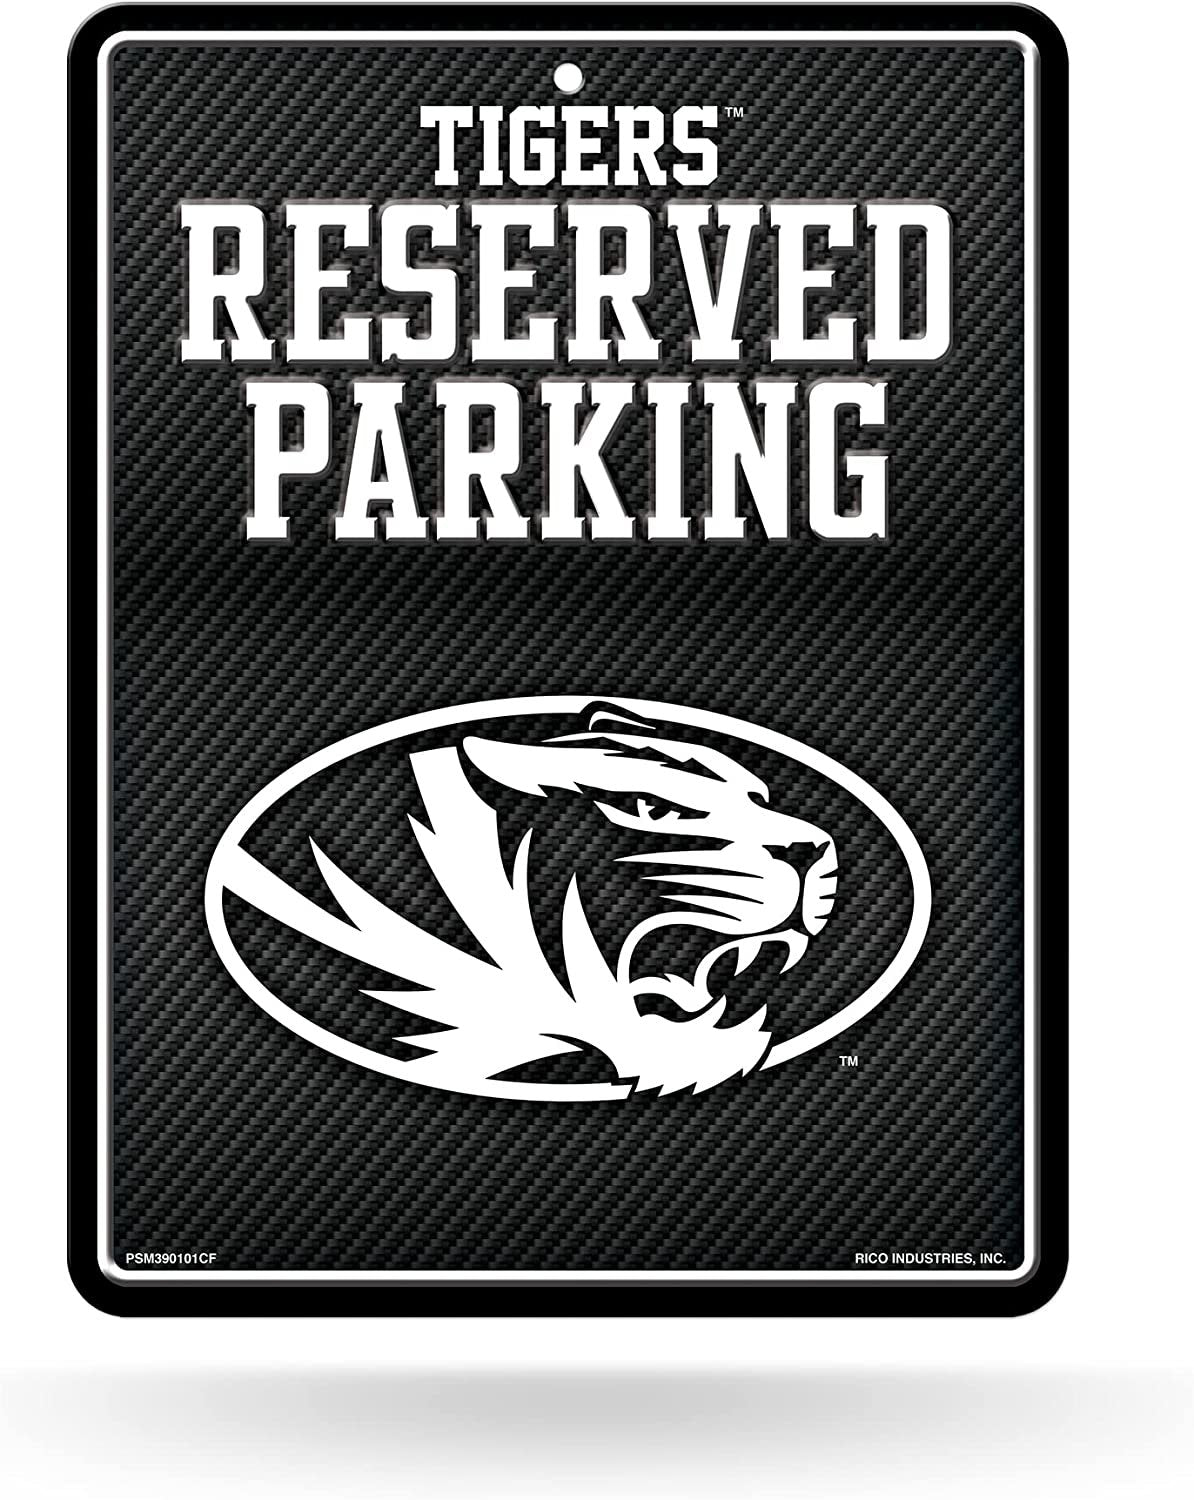 University of Missouri Tigers Metal Parking Novelty Wall Sign 8.5 x 11 Inch Carbon Fiber Design